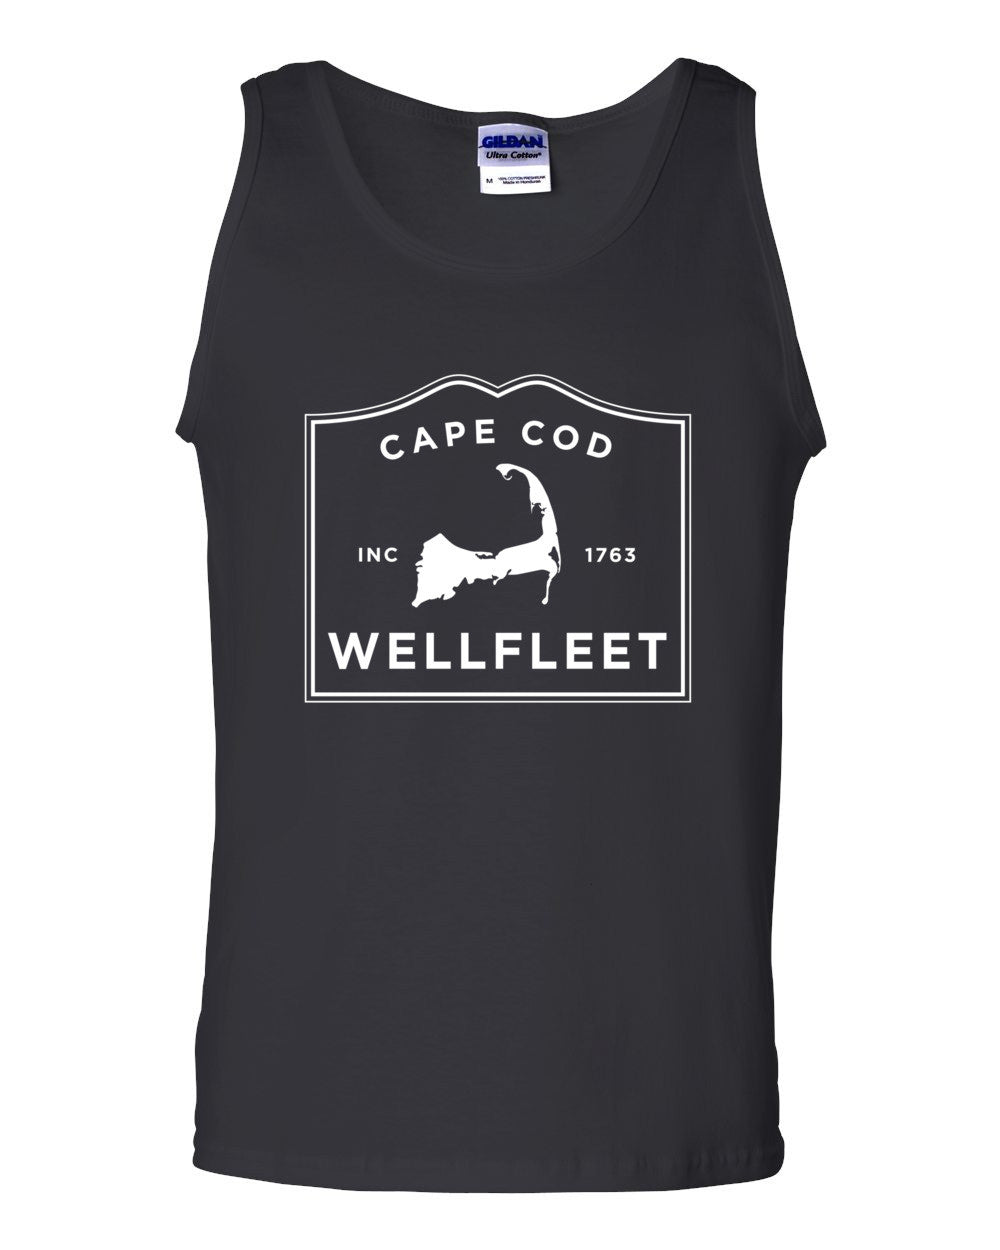 Wellfleet Cape Cod Tank Top